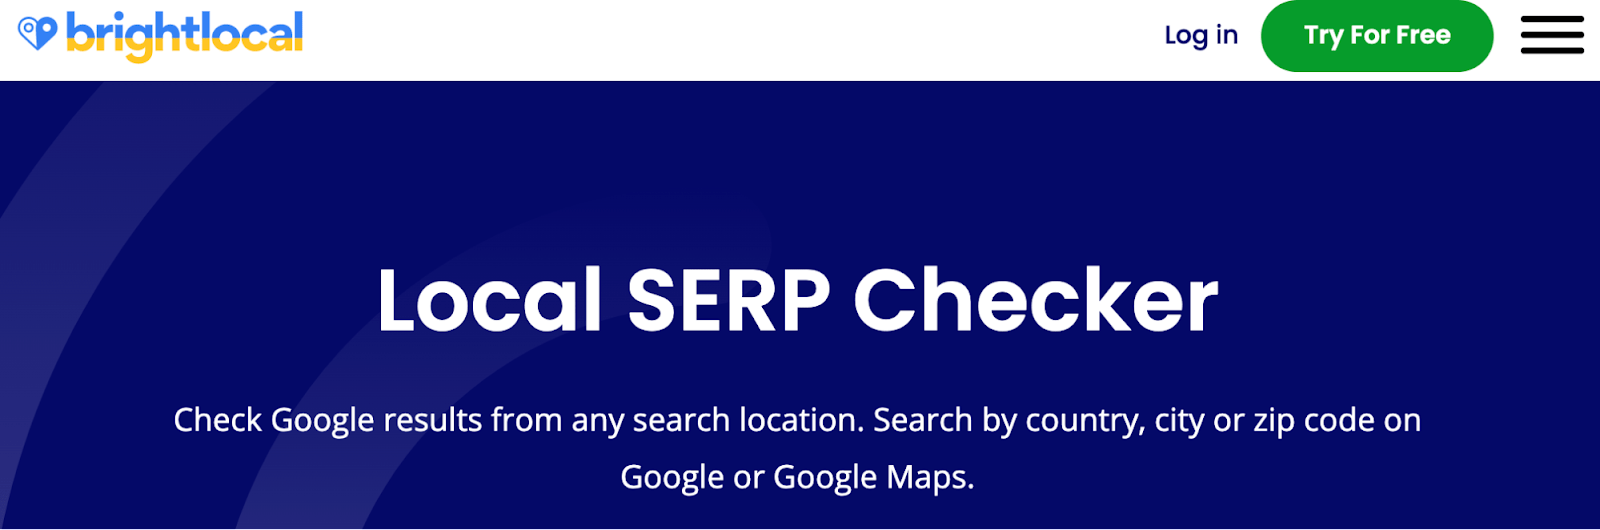 BrightLocal's local SERP checker tool